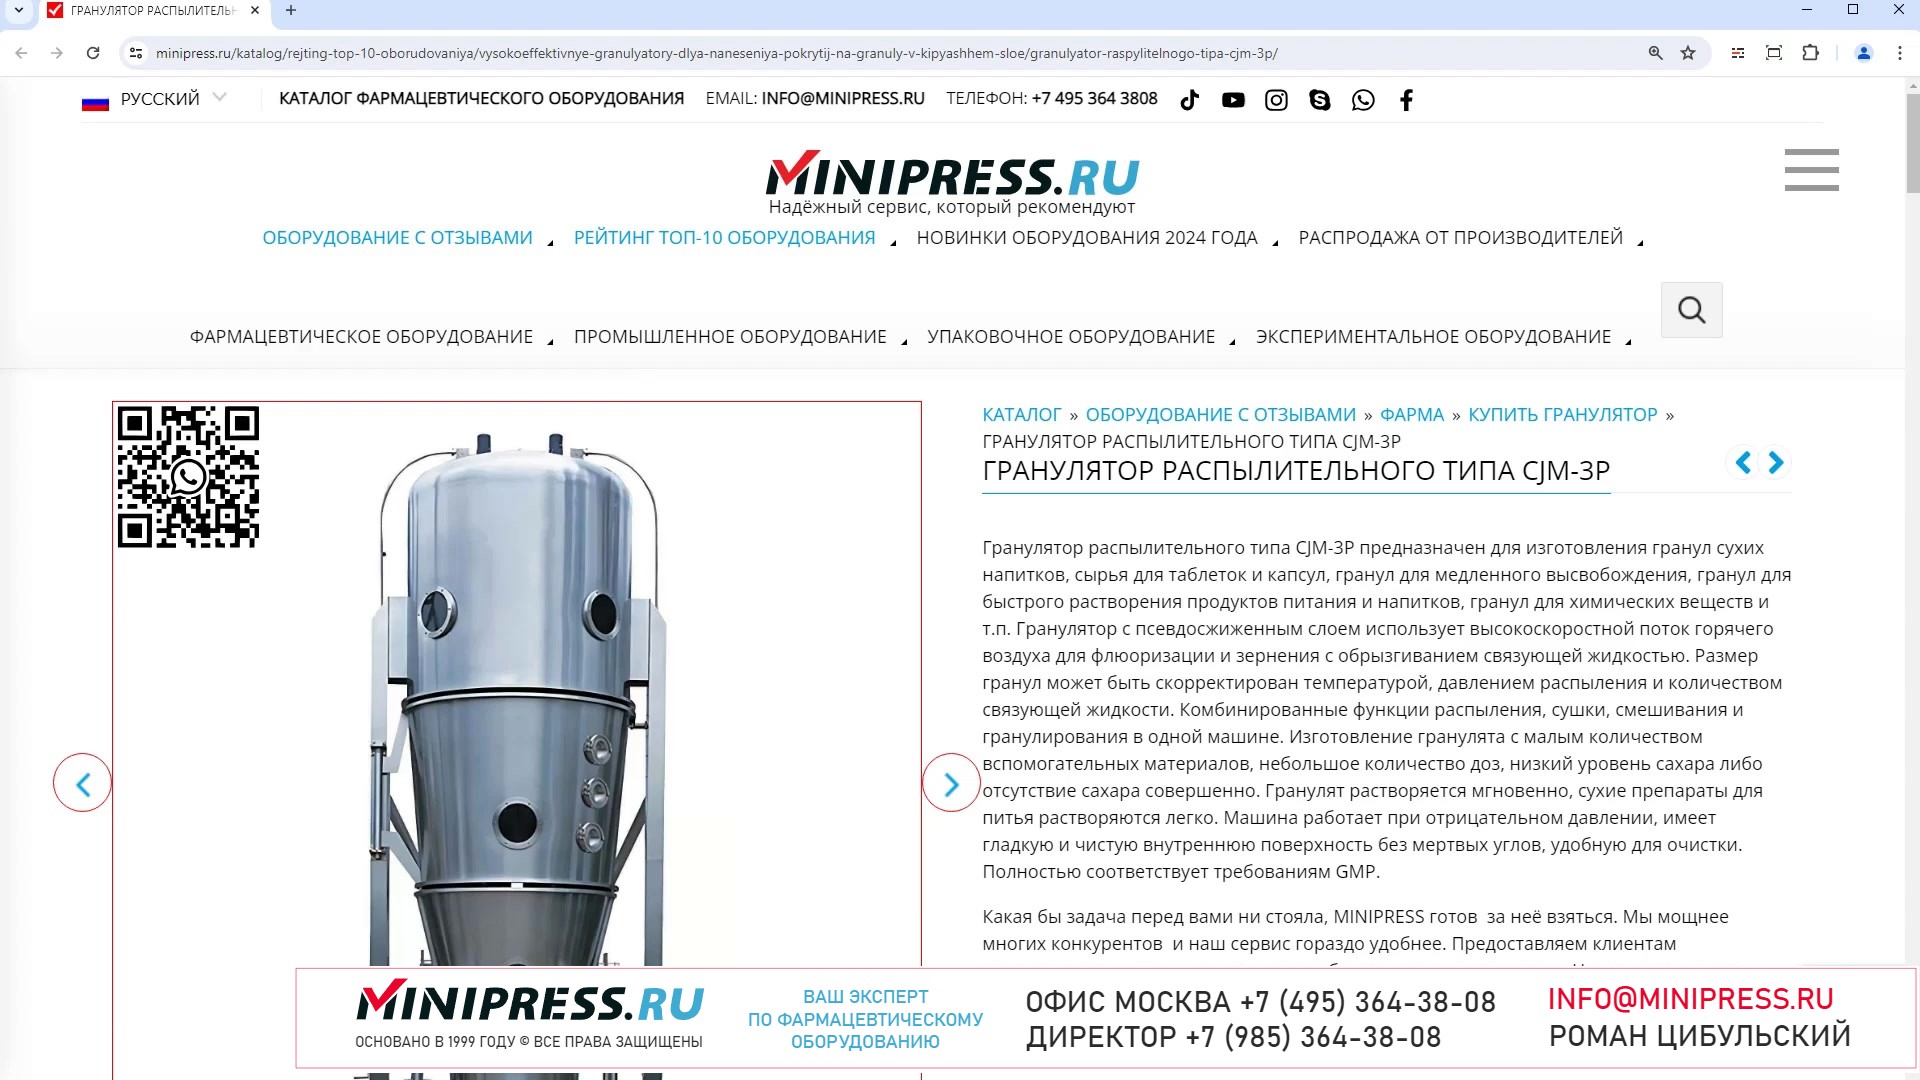 Minipress.ru Гранулятор распылительного типа CJM-3P